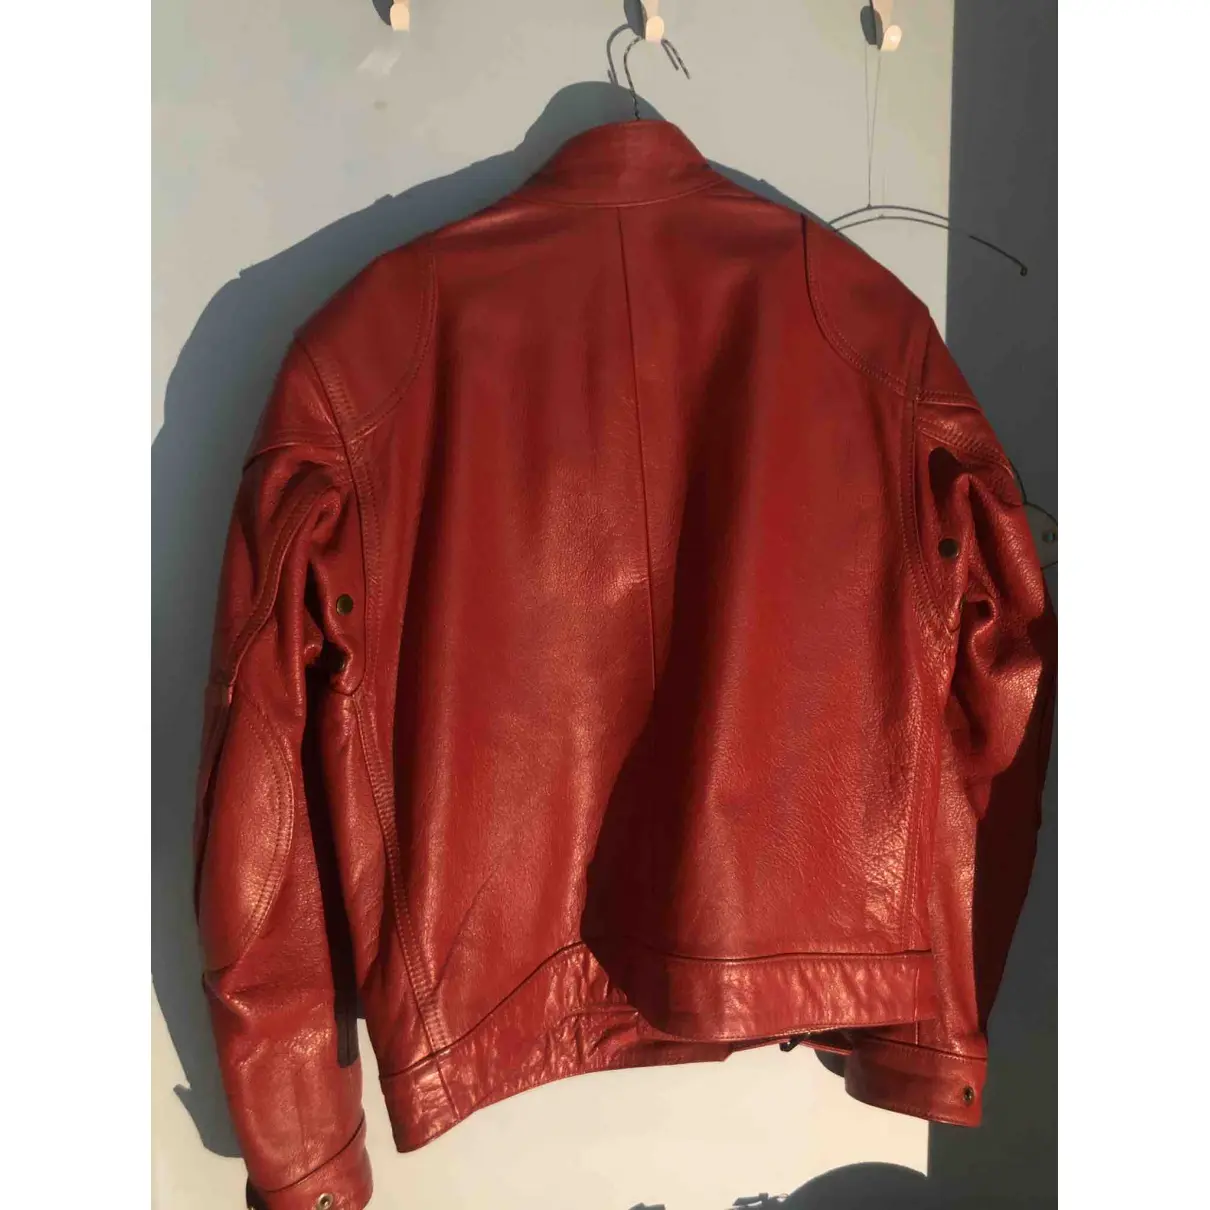 Buy Belstaff Leather jacket online